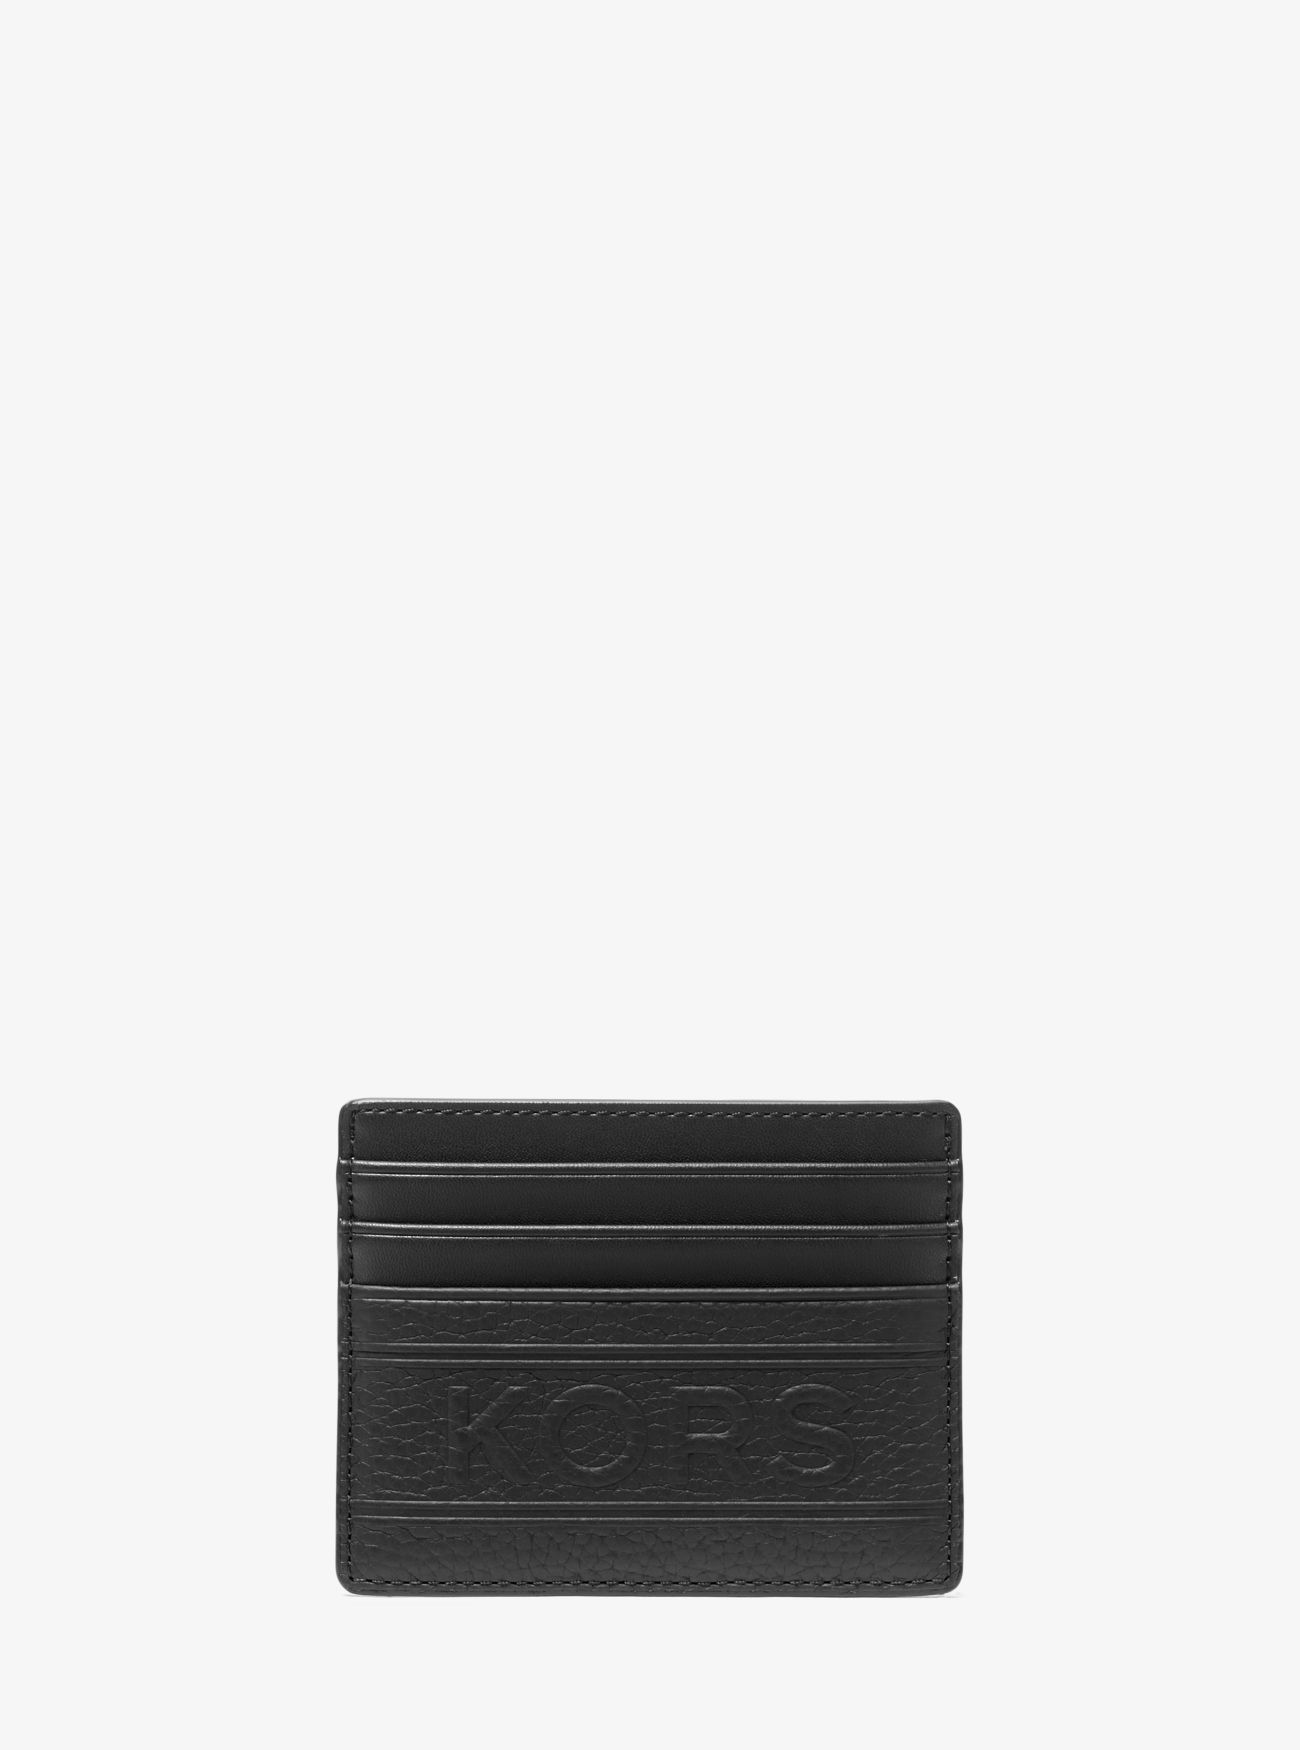 MK Hudson Embossed Pebbled Leather Tall Card Case - Black - Michael Kors